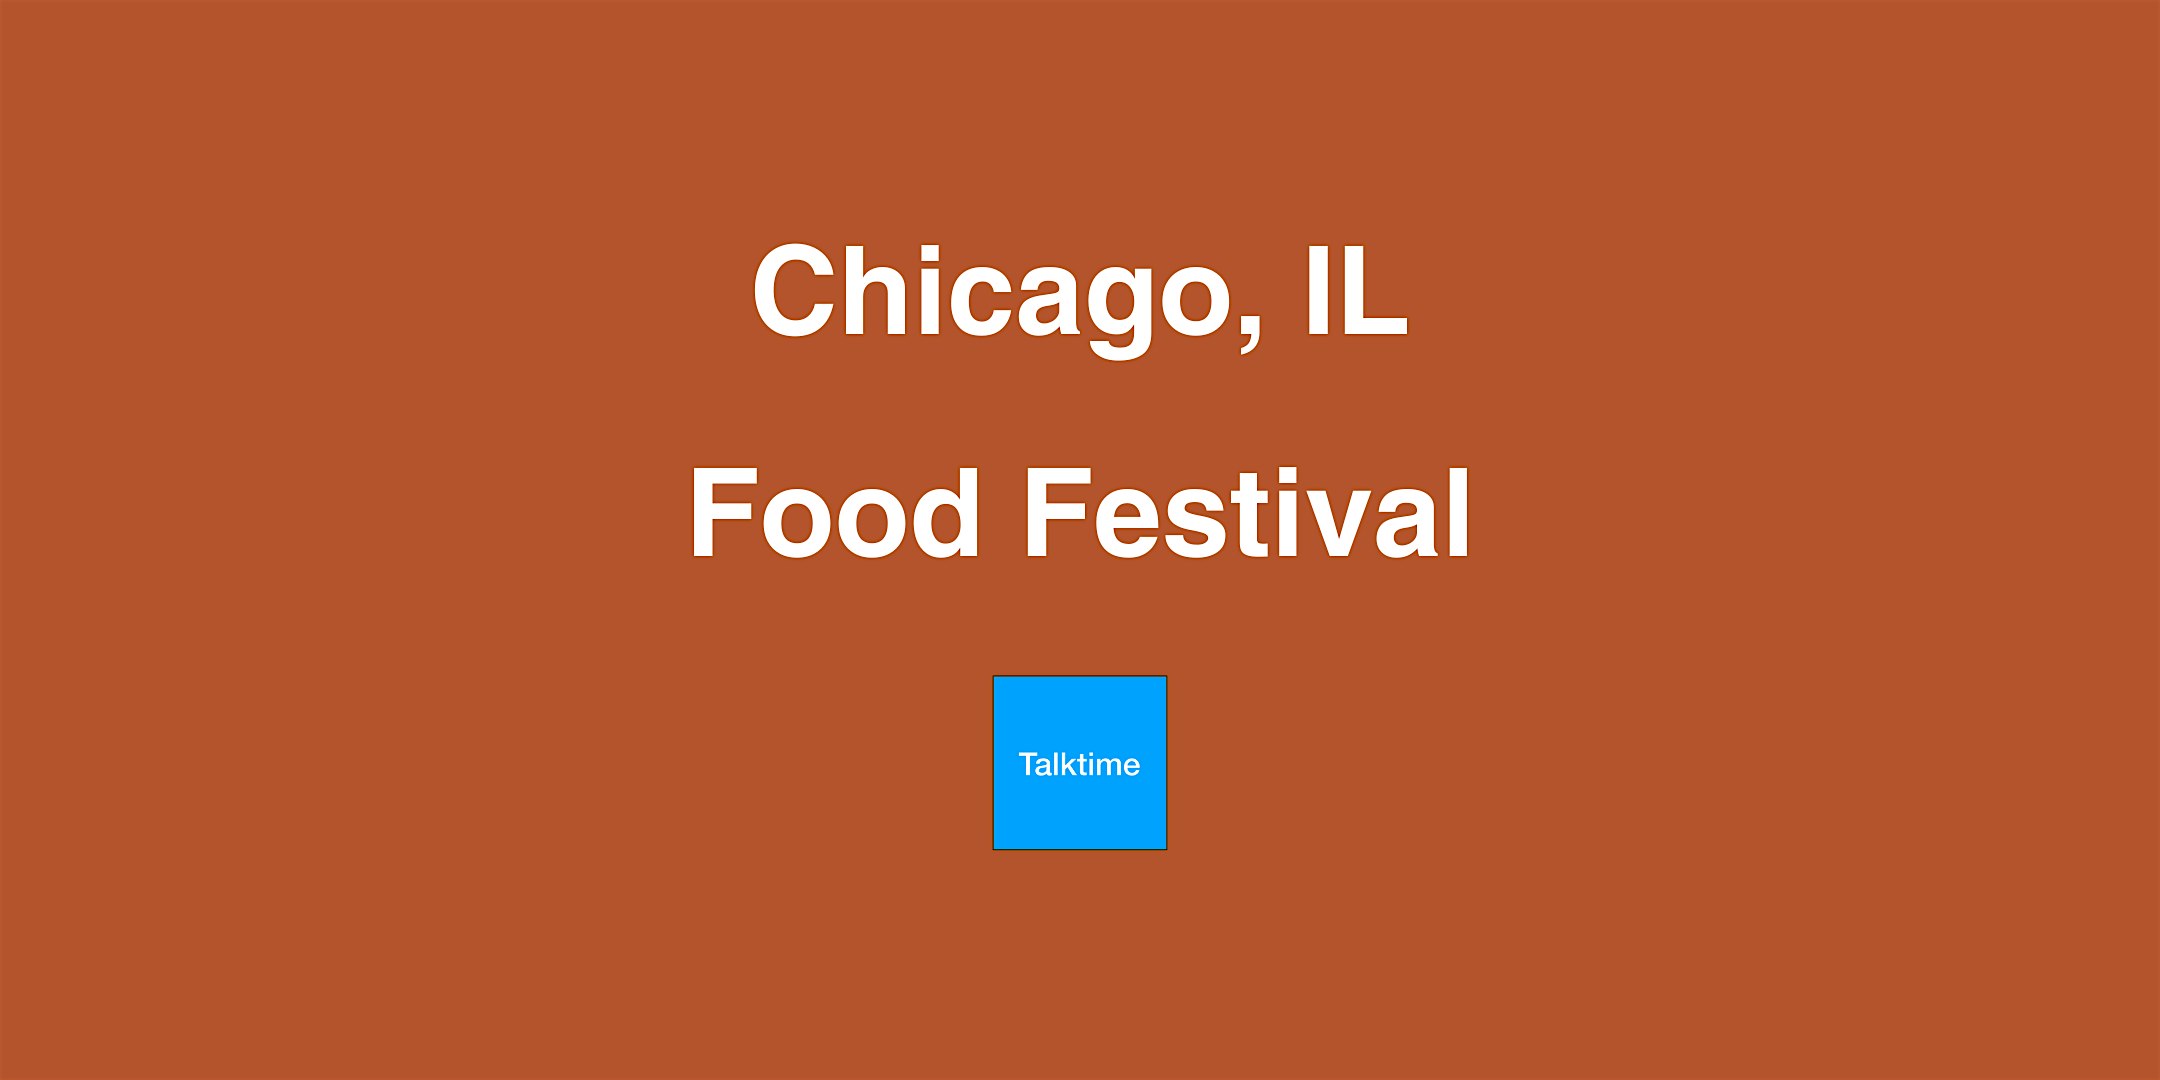 Food Festival - Chicago